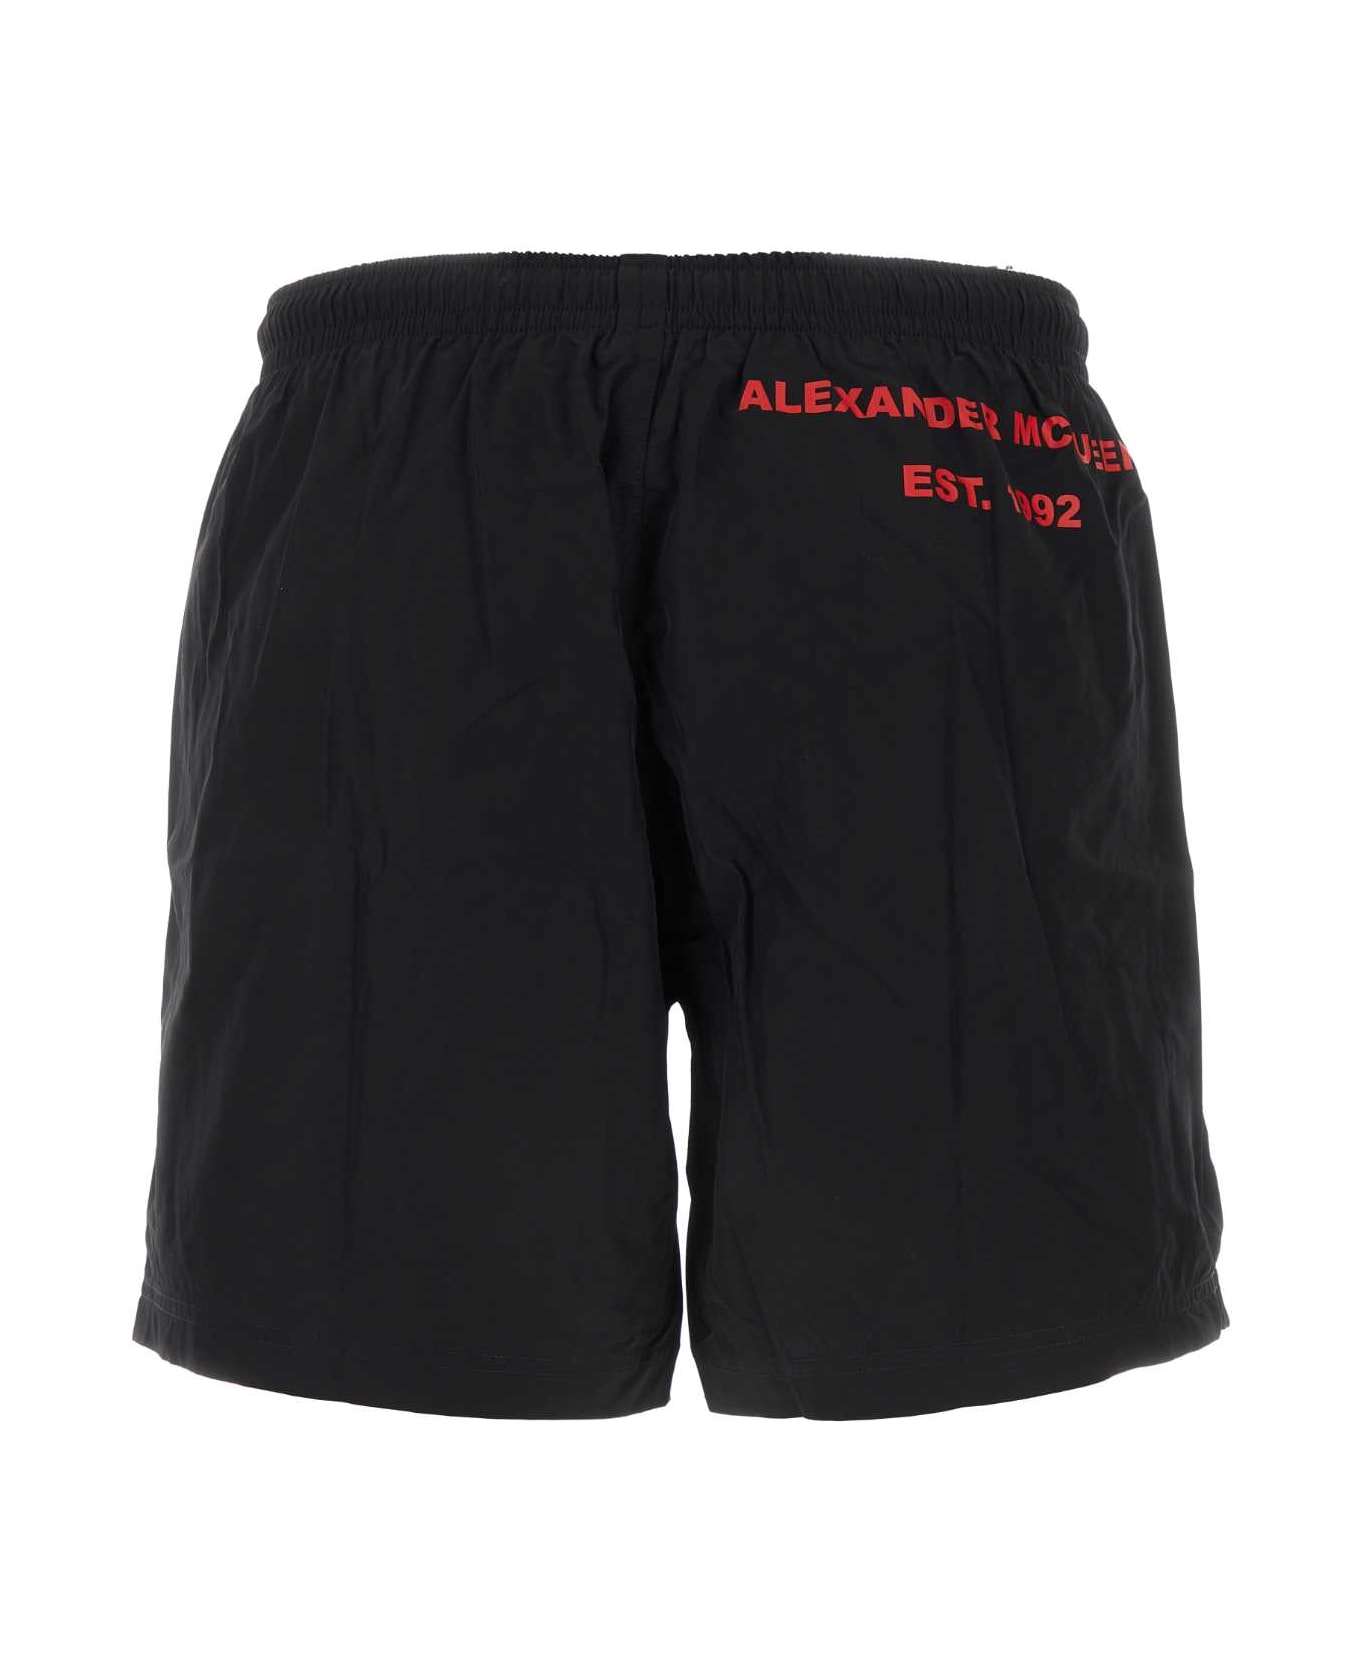 Alexander McQueen Black Nylon Swimming Shorts - BLACKLUSTRED 水着